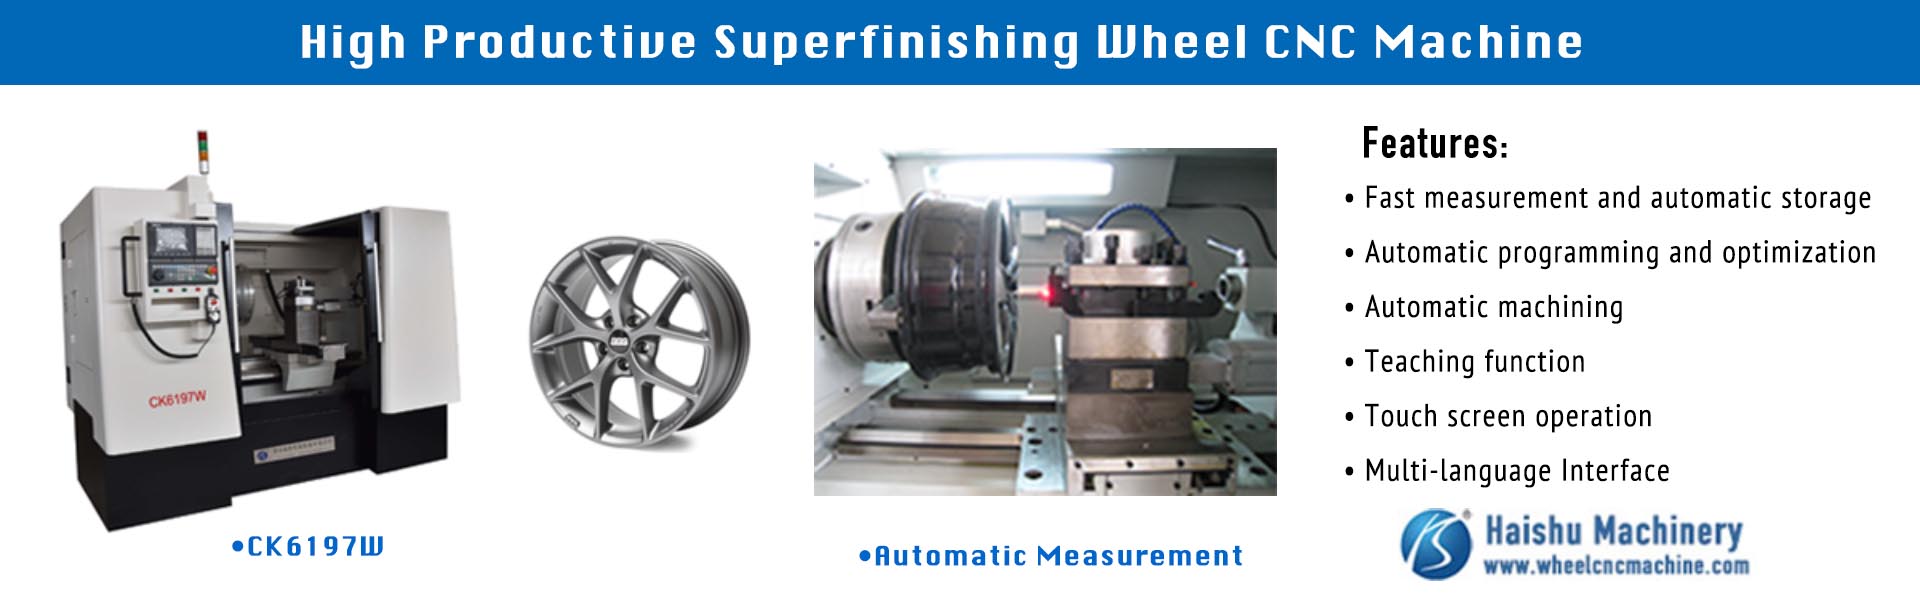 High Productive Superfinishing Wheel CNC Machine